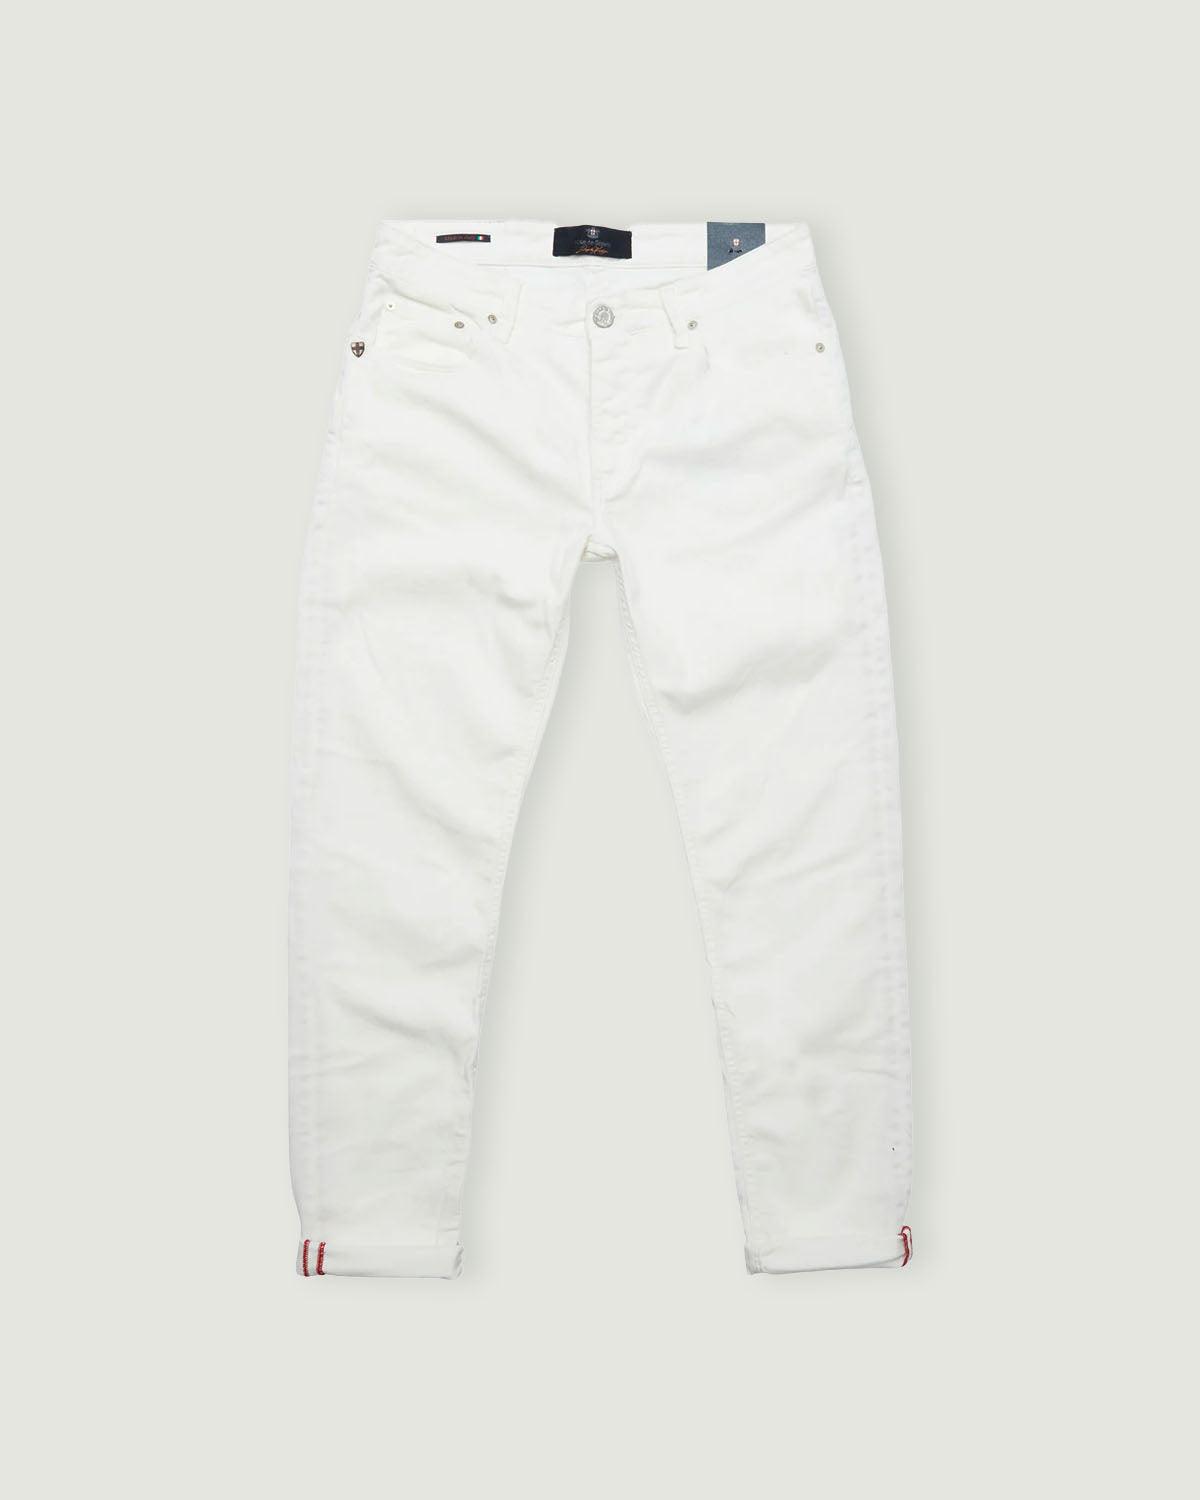 Vinci Bianco Jeans - White - Blue de Genes - Kul og Koks